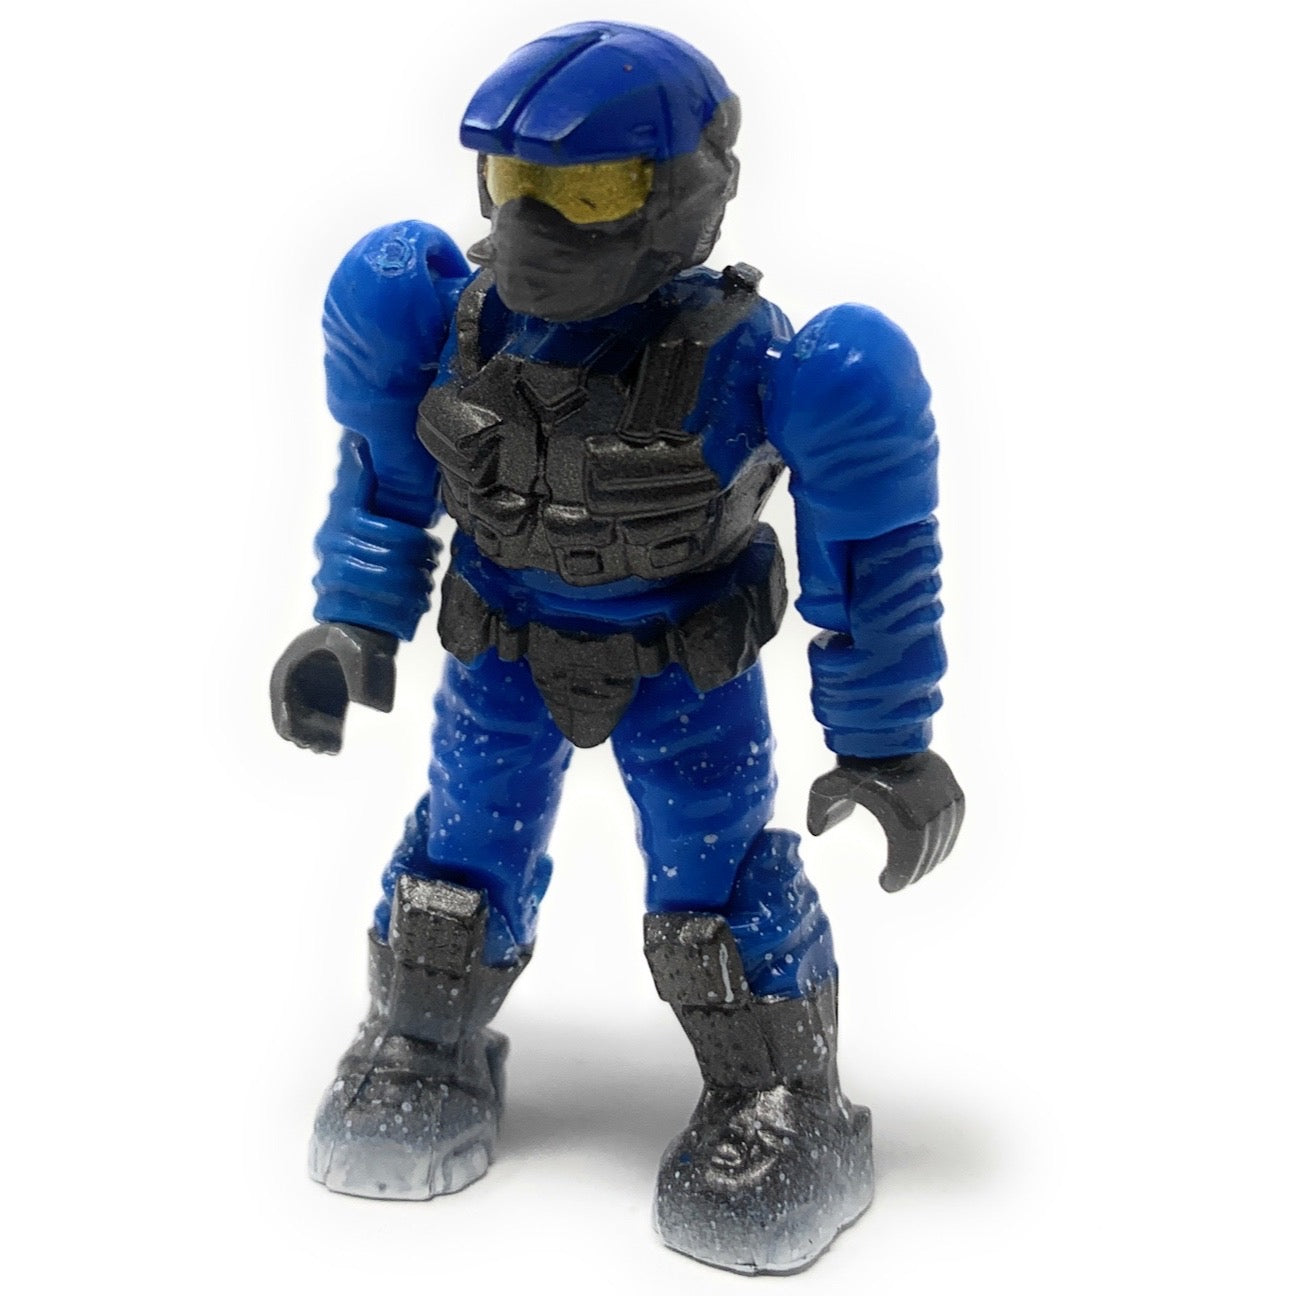 UNSC Marine (Blue, Snow) - Mega Construx Halo Micro Figure (2012) [LOOSE]